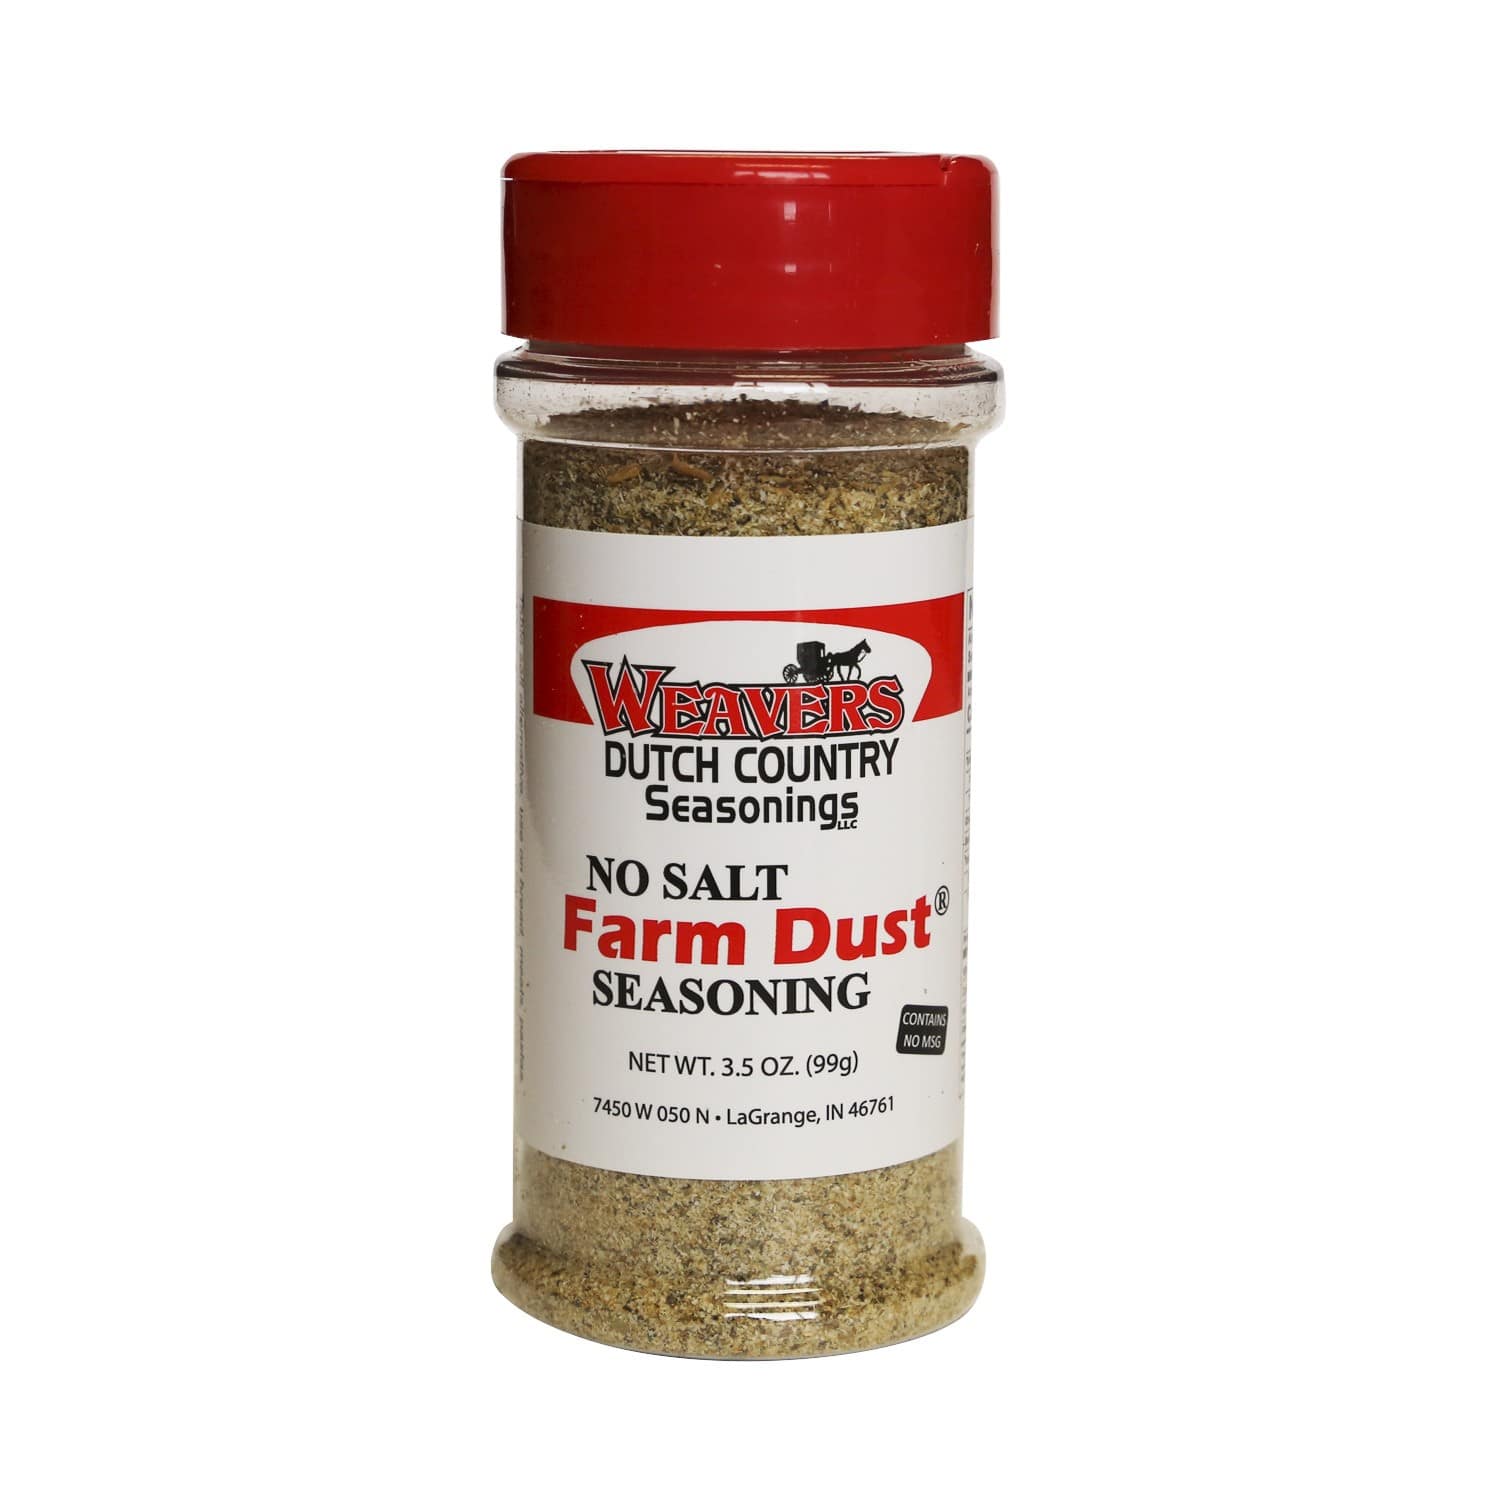 https://www.dutchcountrygeneralstore.com/wp-content/uploads/2021/04/Weavers-Dutch-Country-Seasoning-Farm-Dust-No-Salt-3.5-oz.jpg